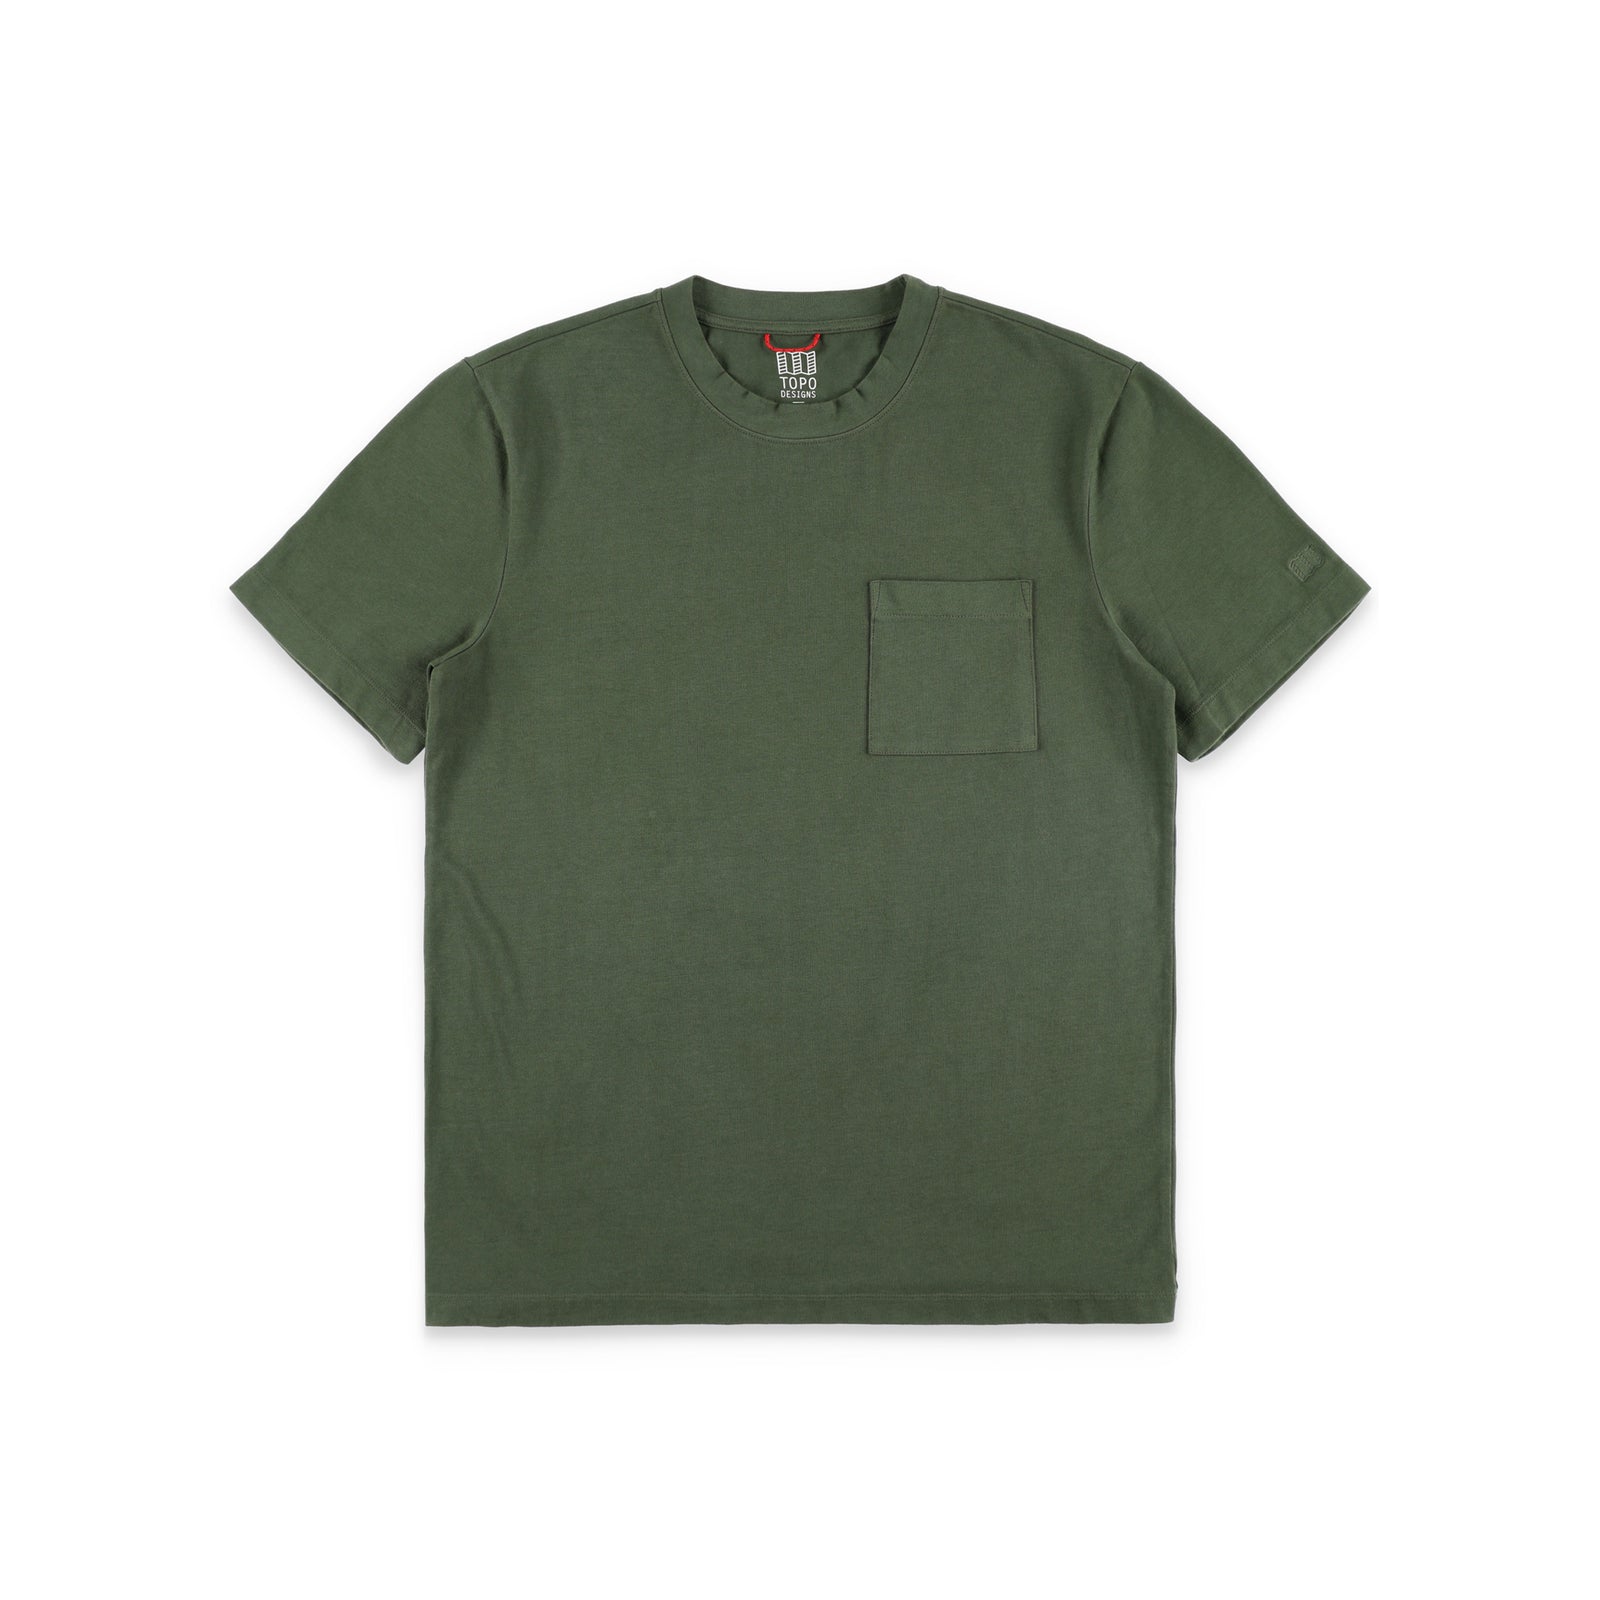 Topo Designs Men's Dirt Pocket Tee 100% organic cotton short sleeve t-shirt in "olive" green